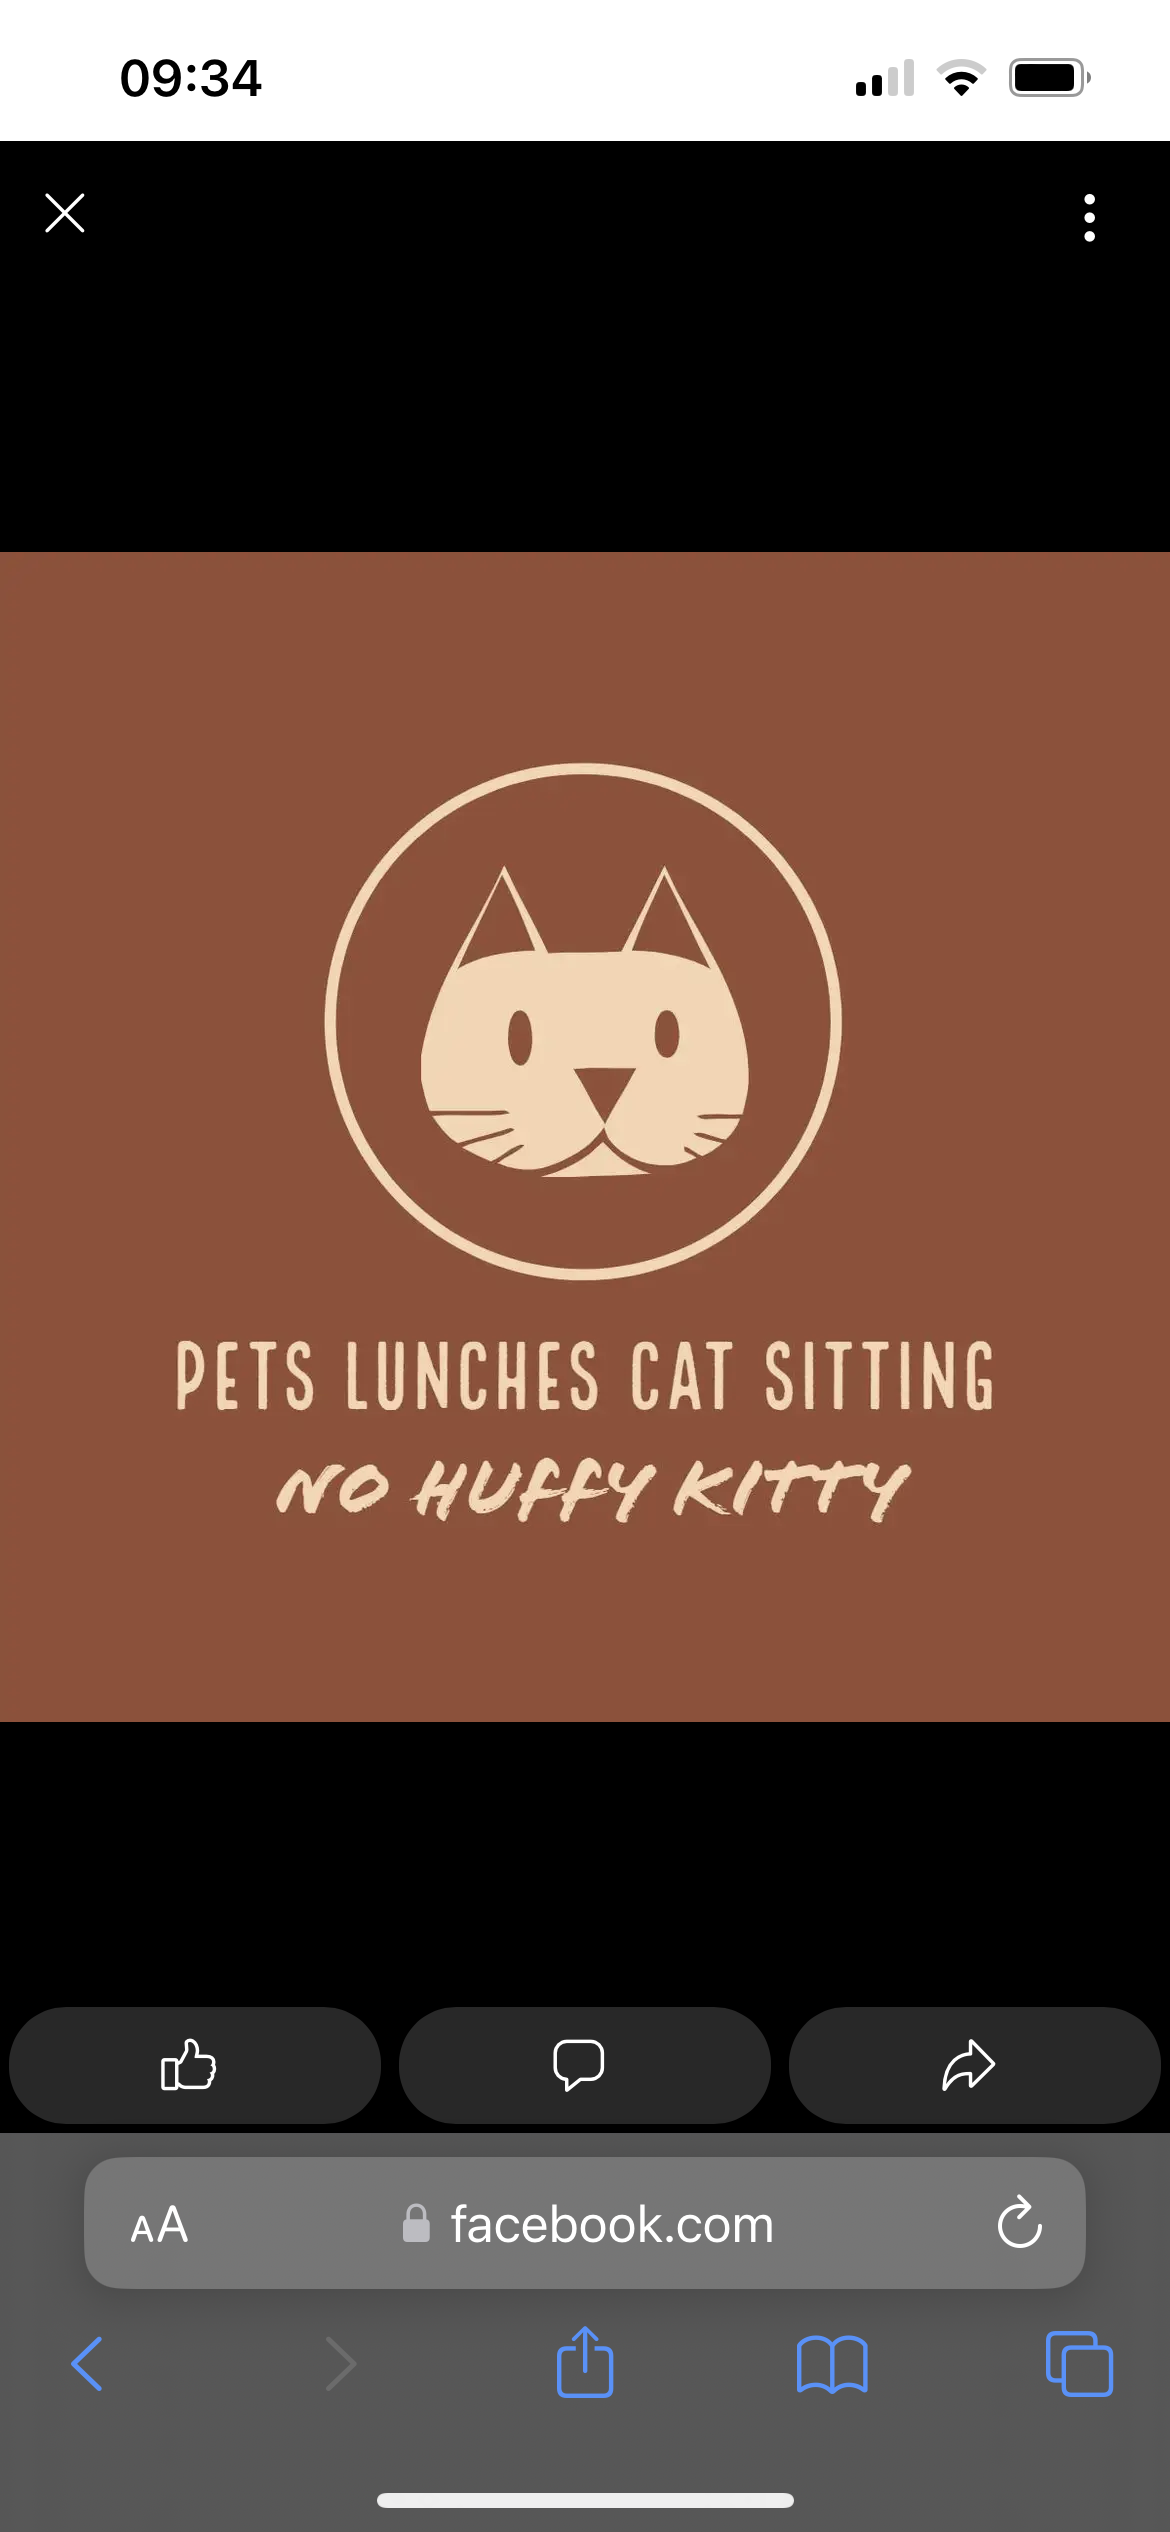 Logo of Pets lunches West Lothian Cat sitter Pet Services In Livingston, West Lothian